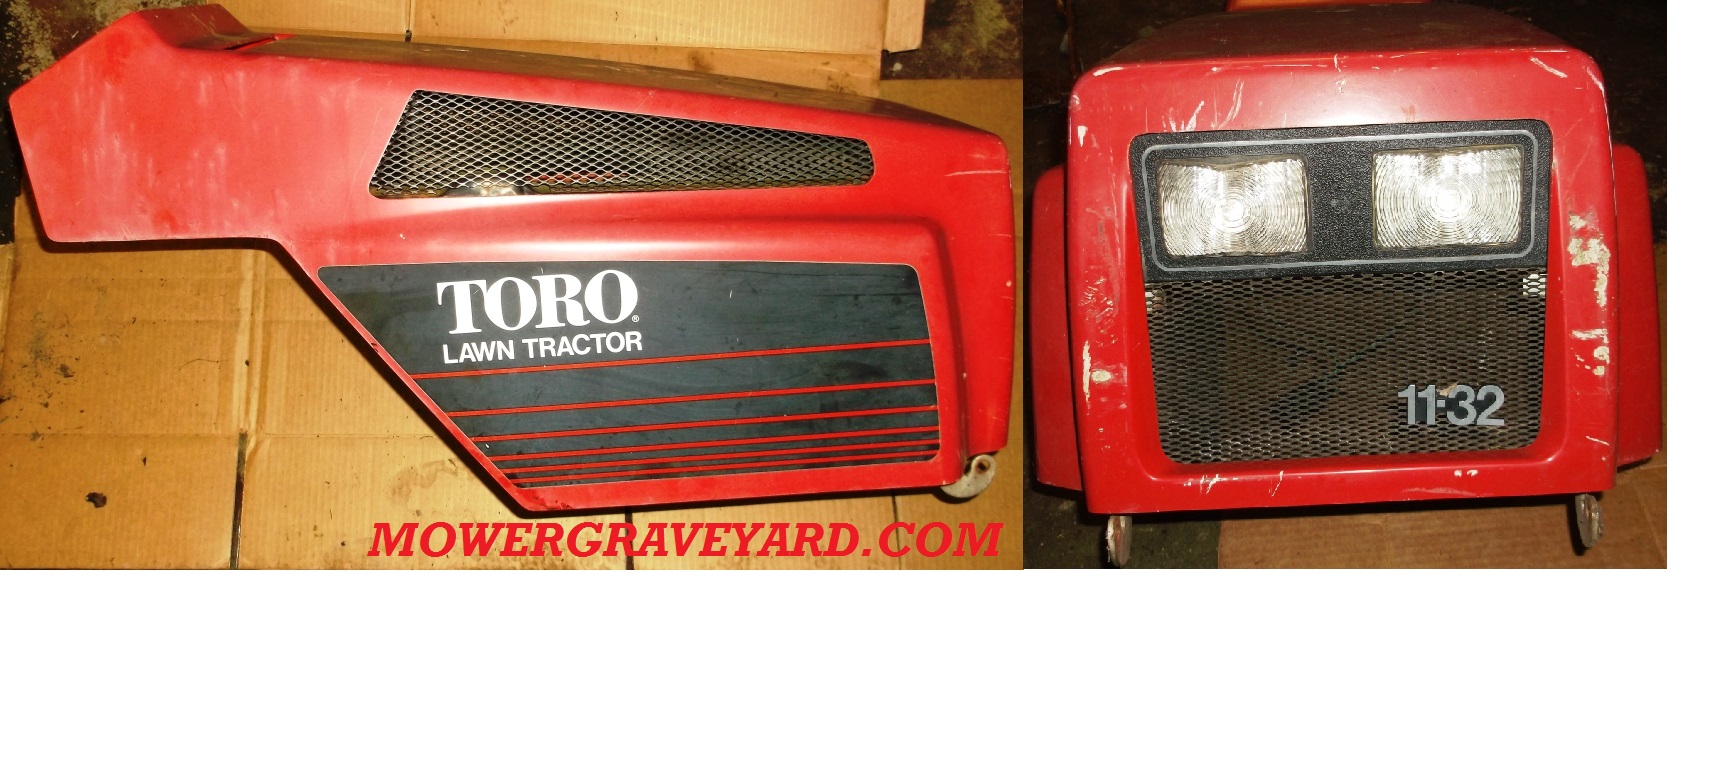 Toro / Wheel Horse :, Lawn Mower Grave Yard Equipment Used Tractor ...